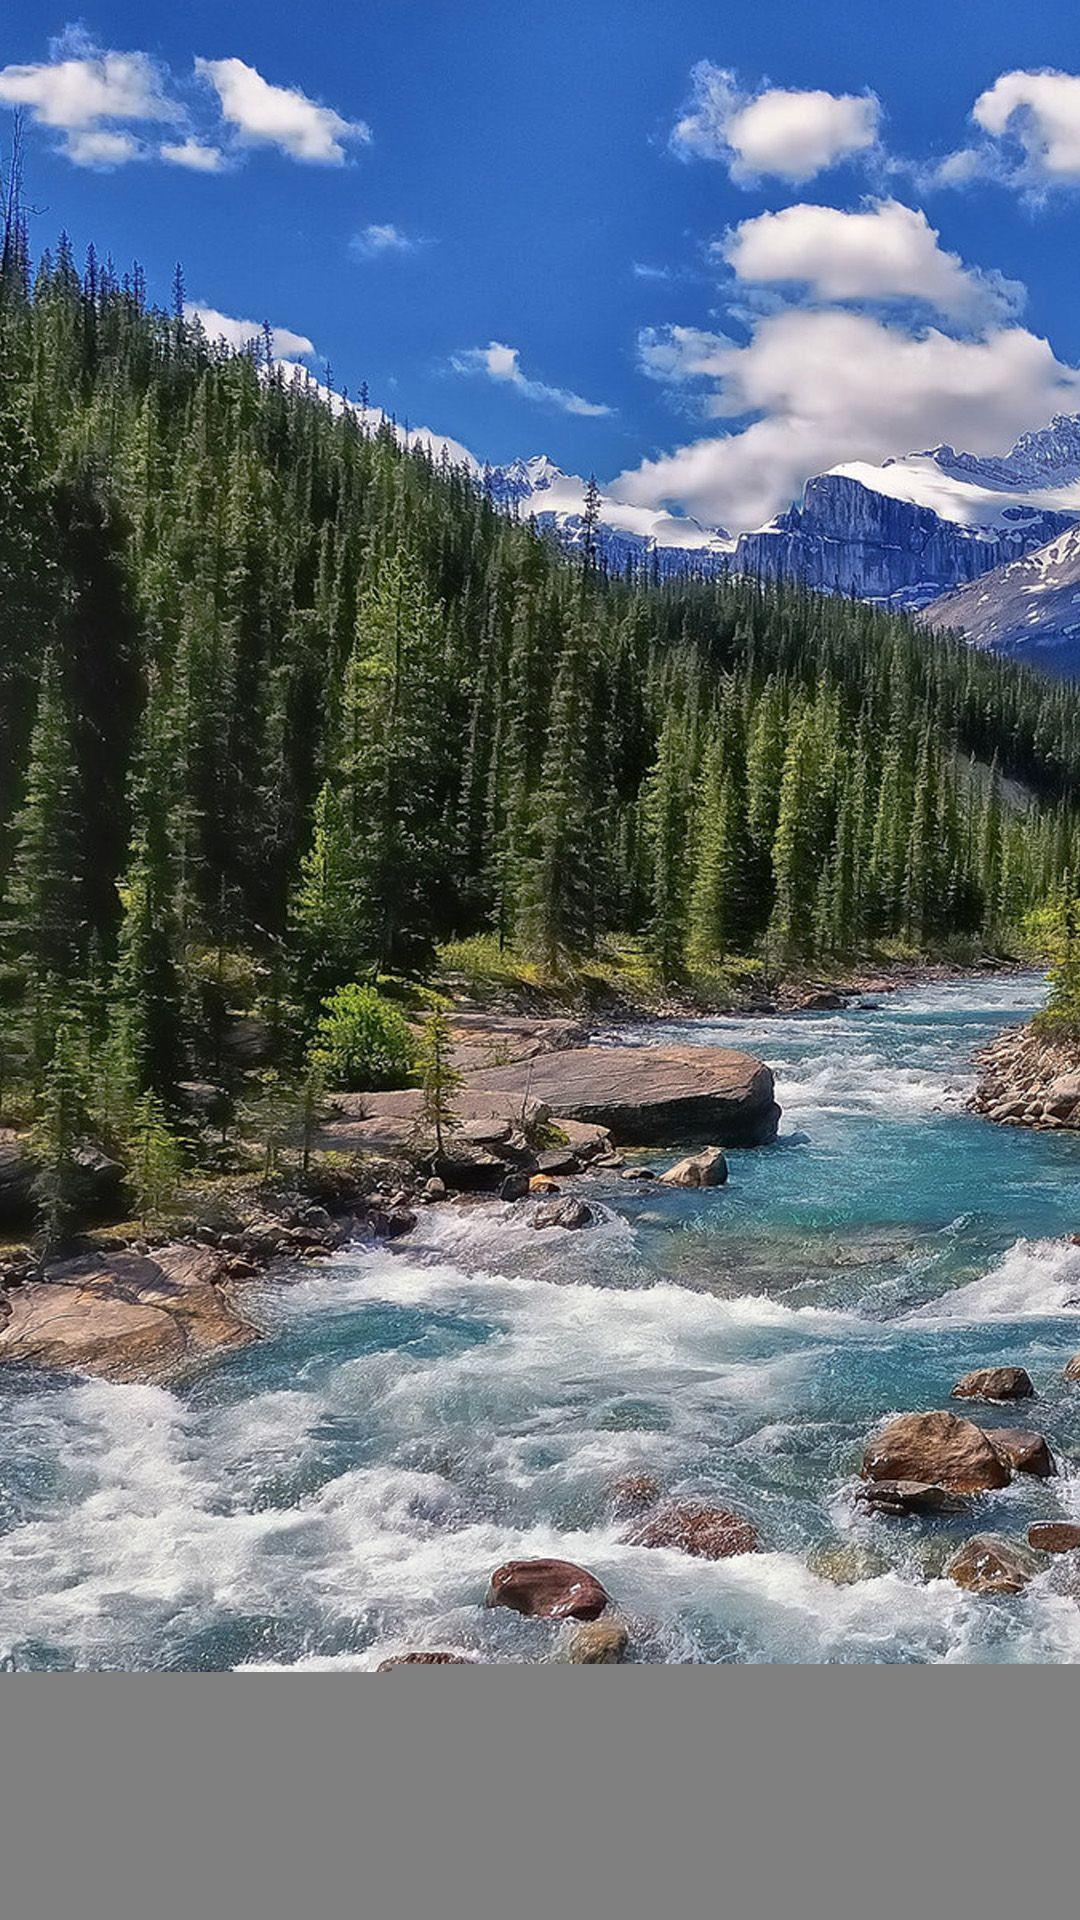 1080x1920 Canada Banff National Park Hình nền iPhone 6 Plus - Banff